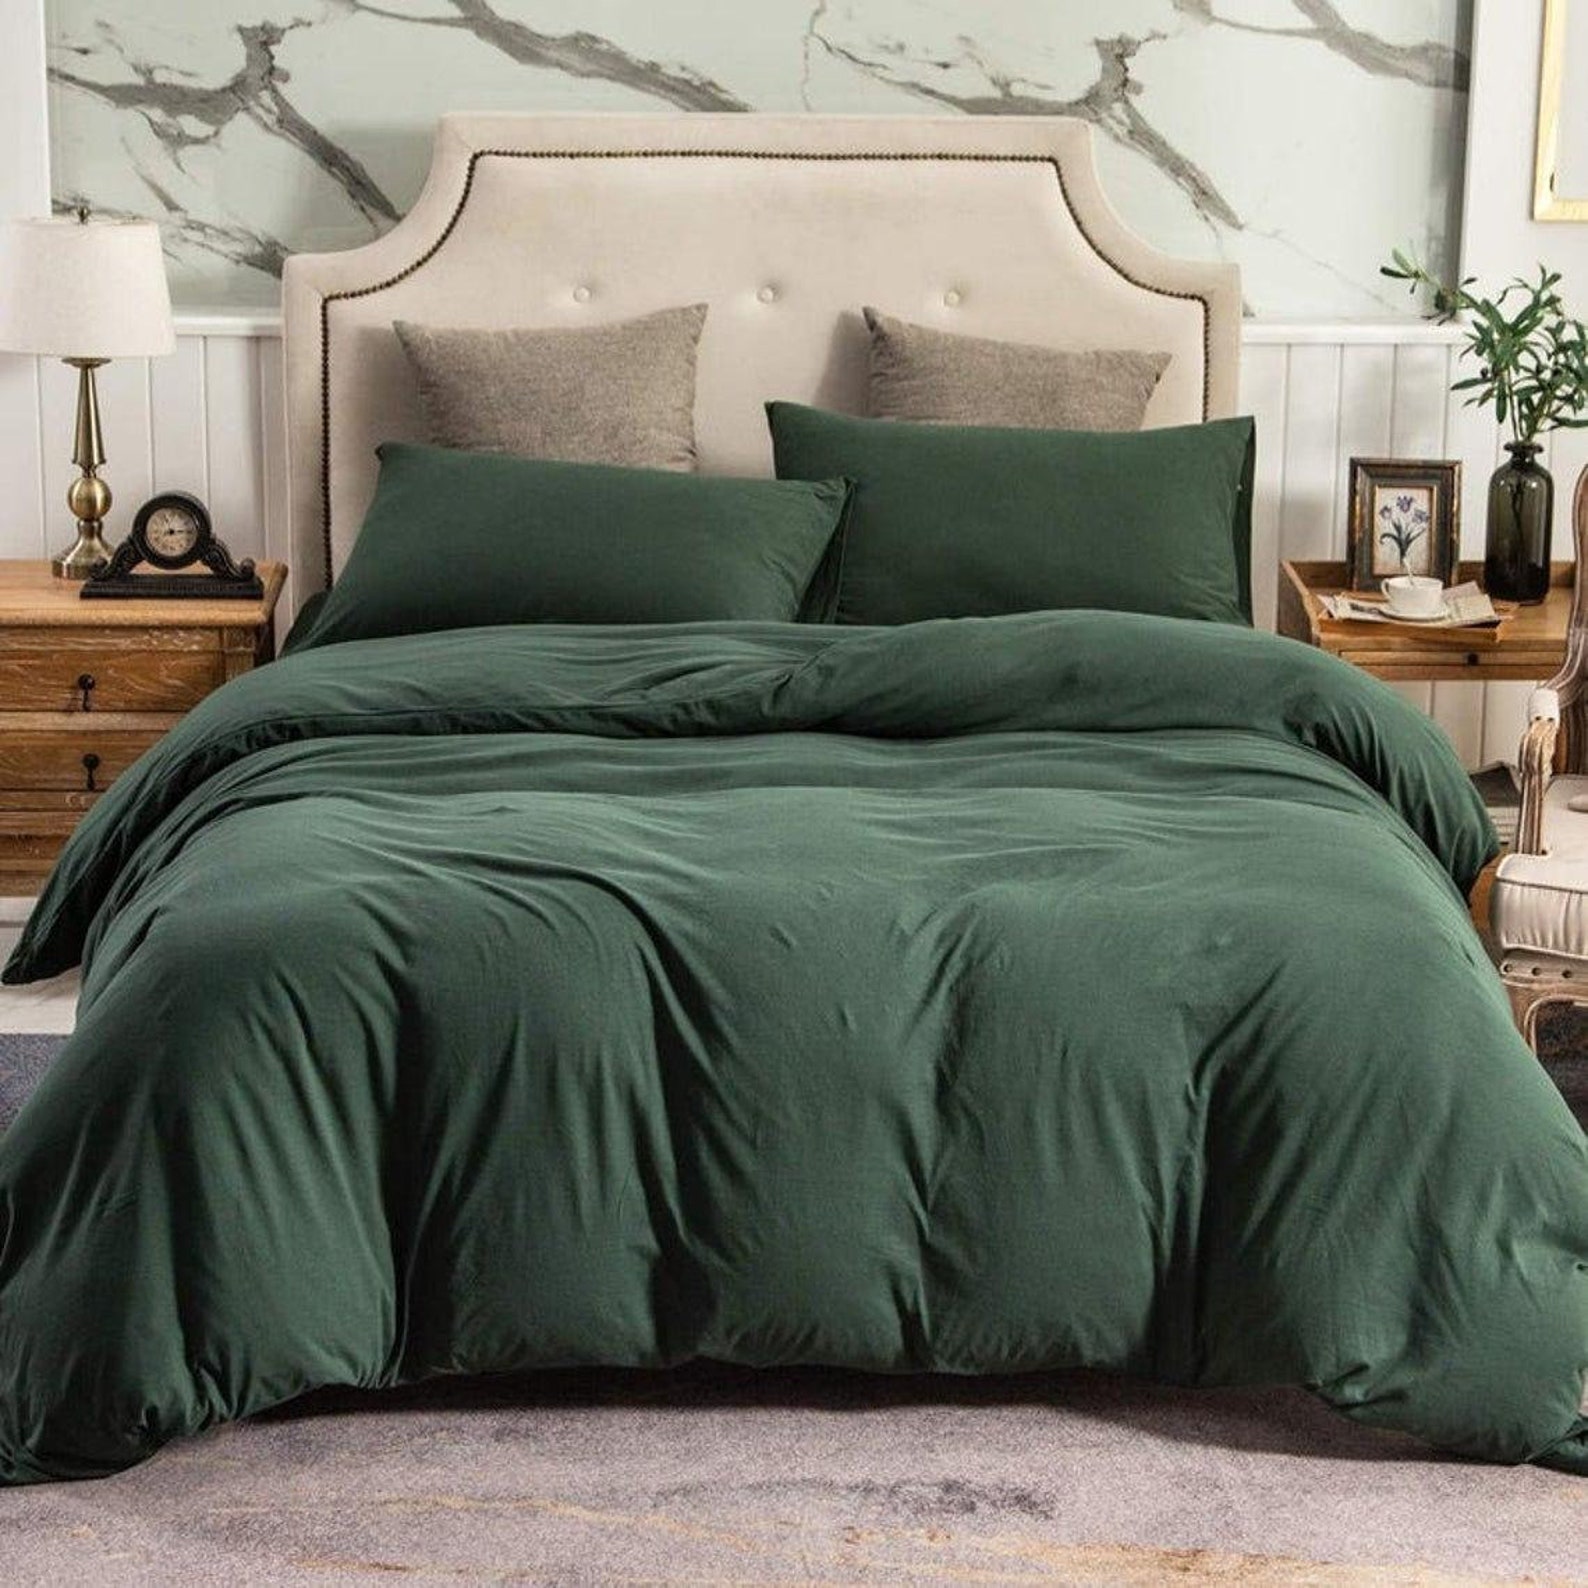 5 Pcs Forest Green Cotton Duvet Cover set Queen Bedding King | Etsy